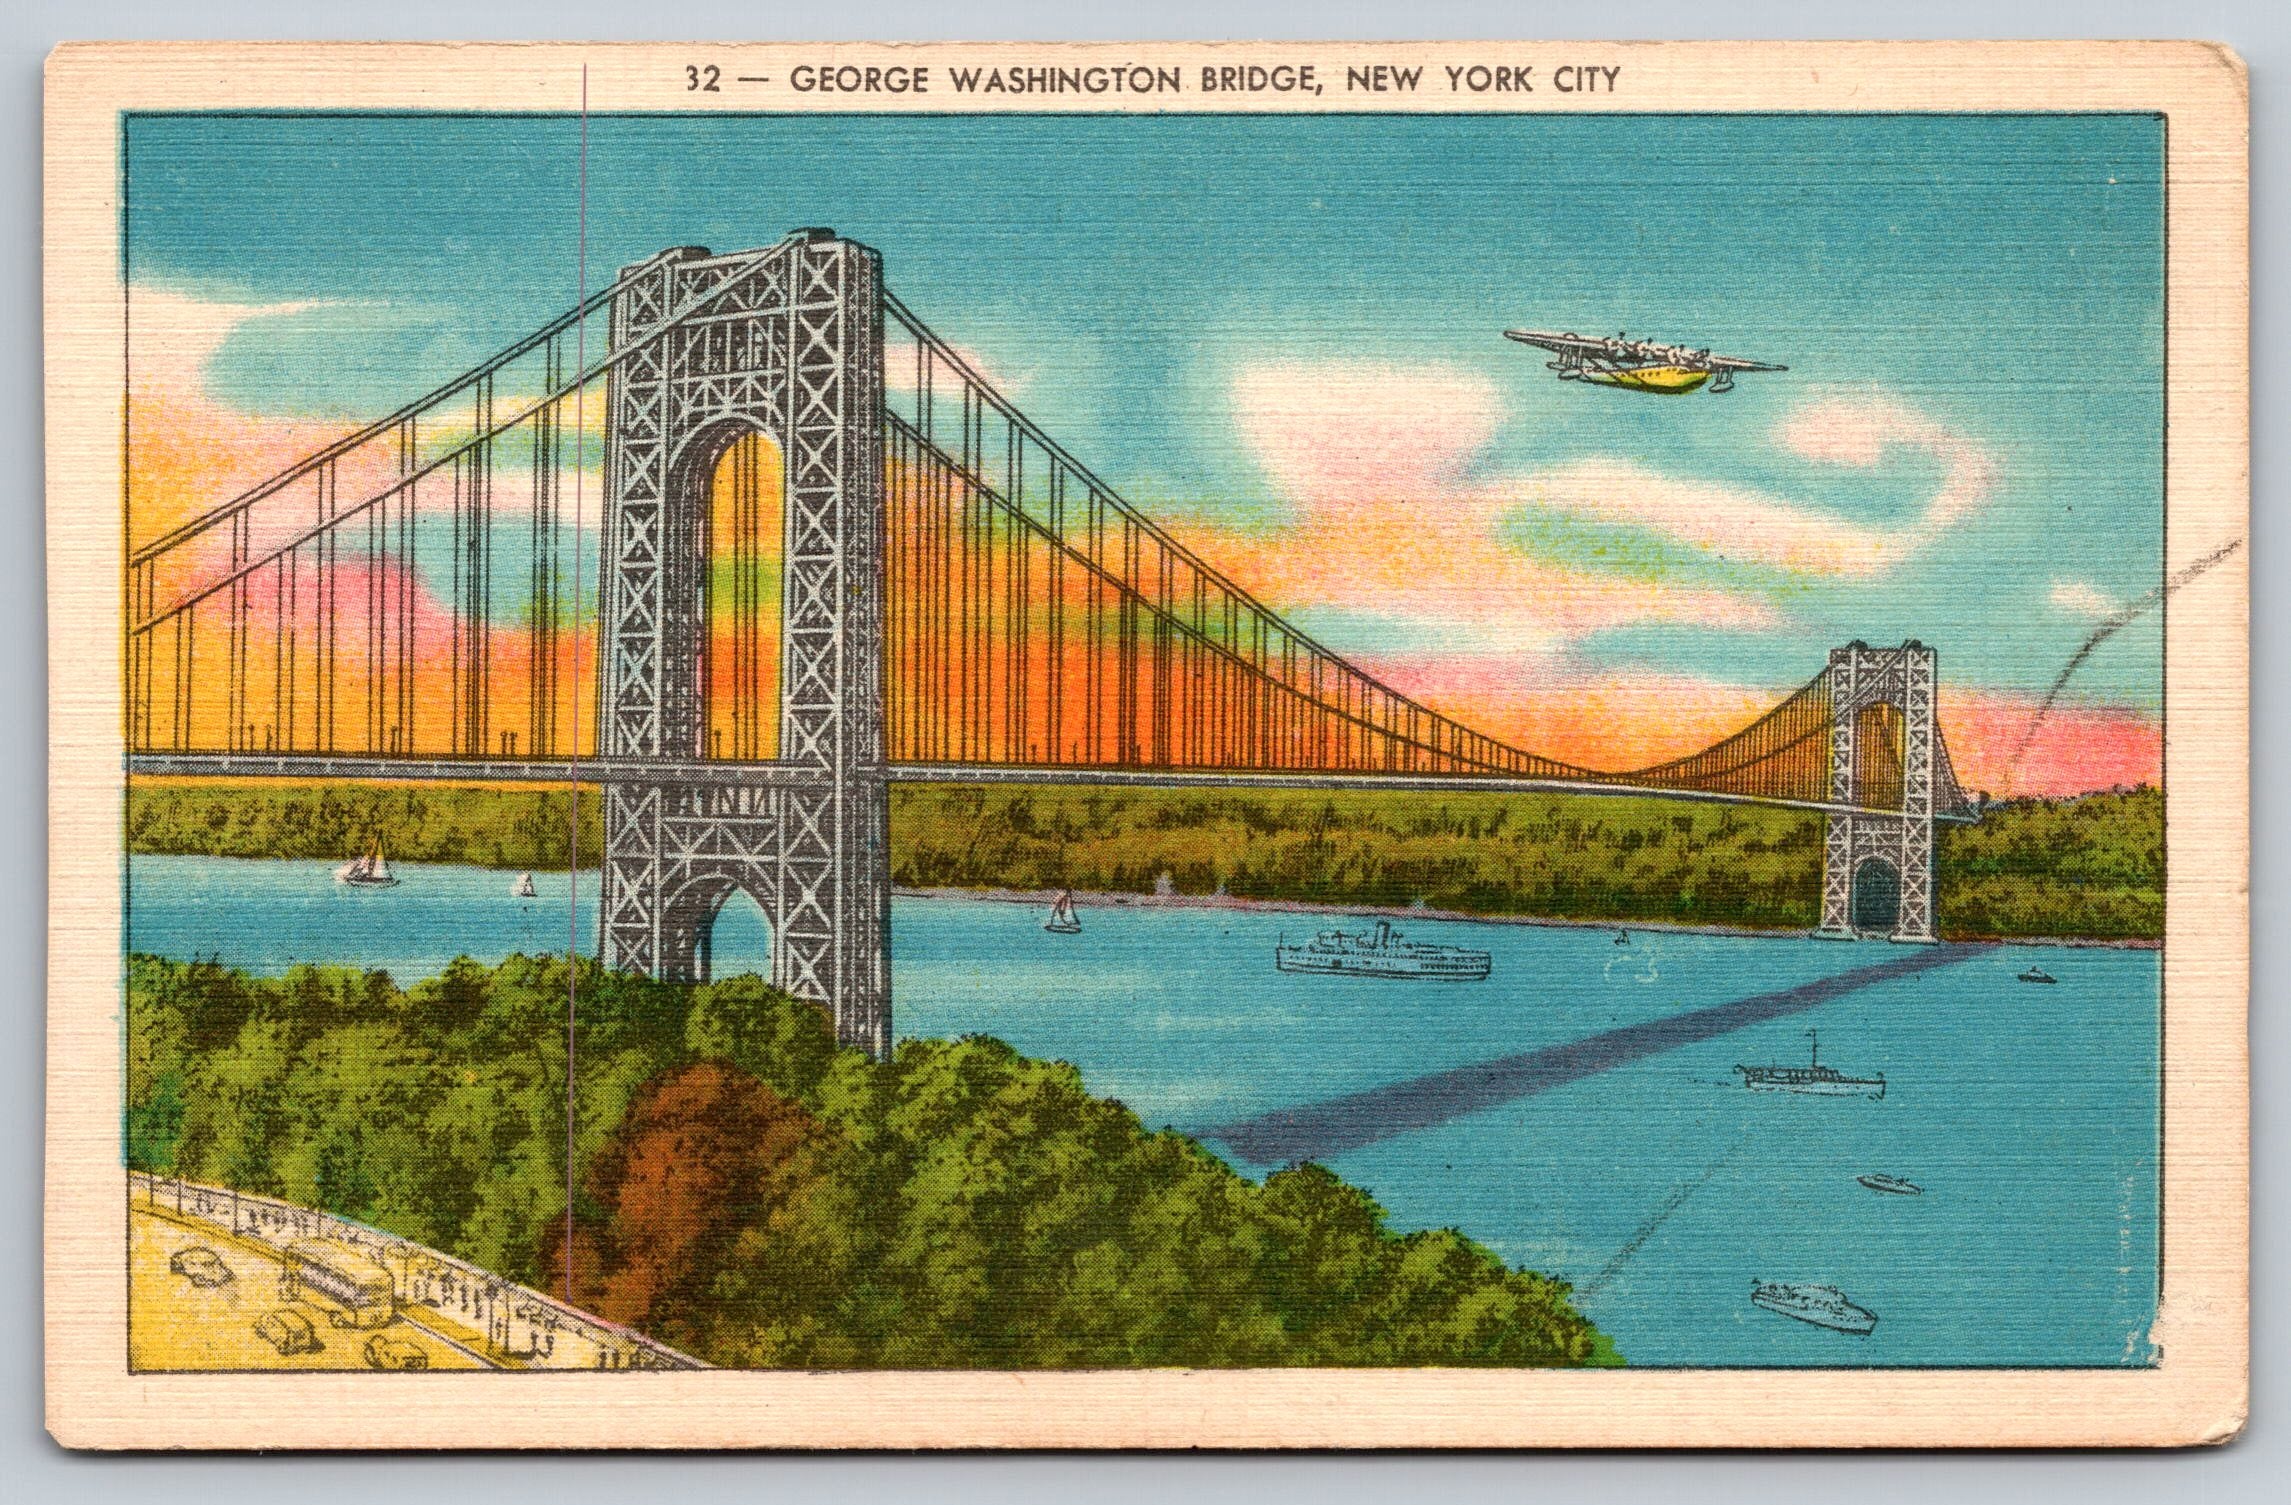 George Washington Bridge, New York City, USA, Vintage Post Card